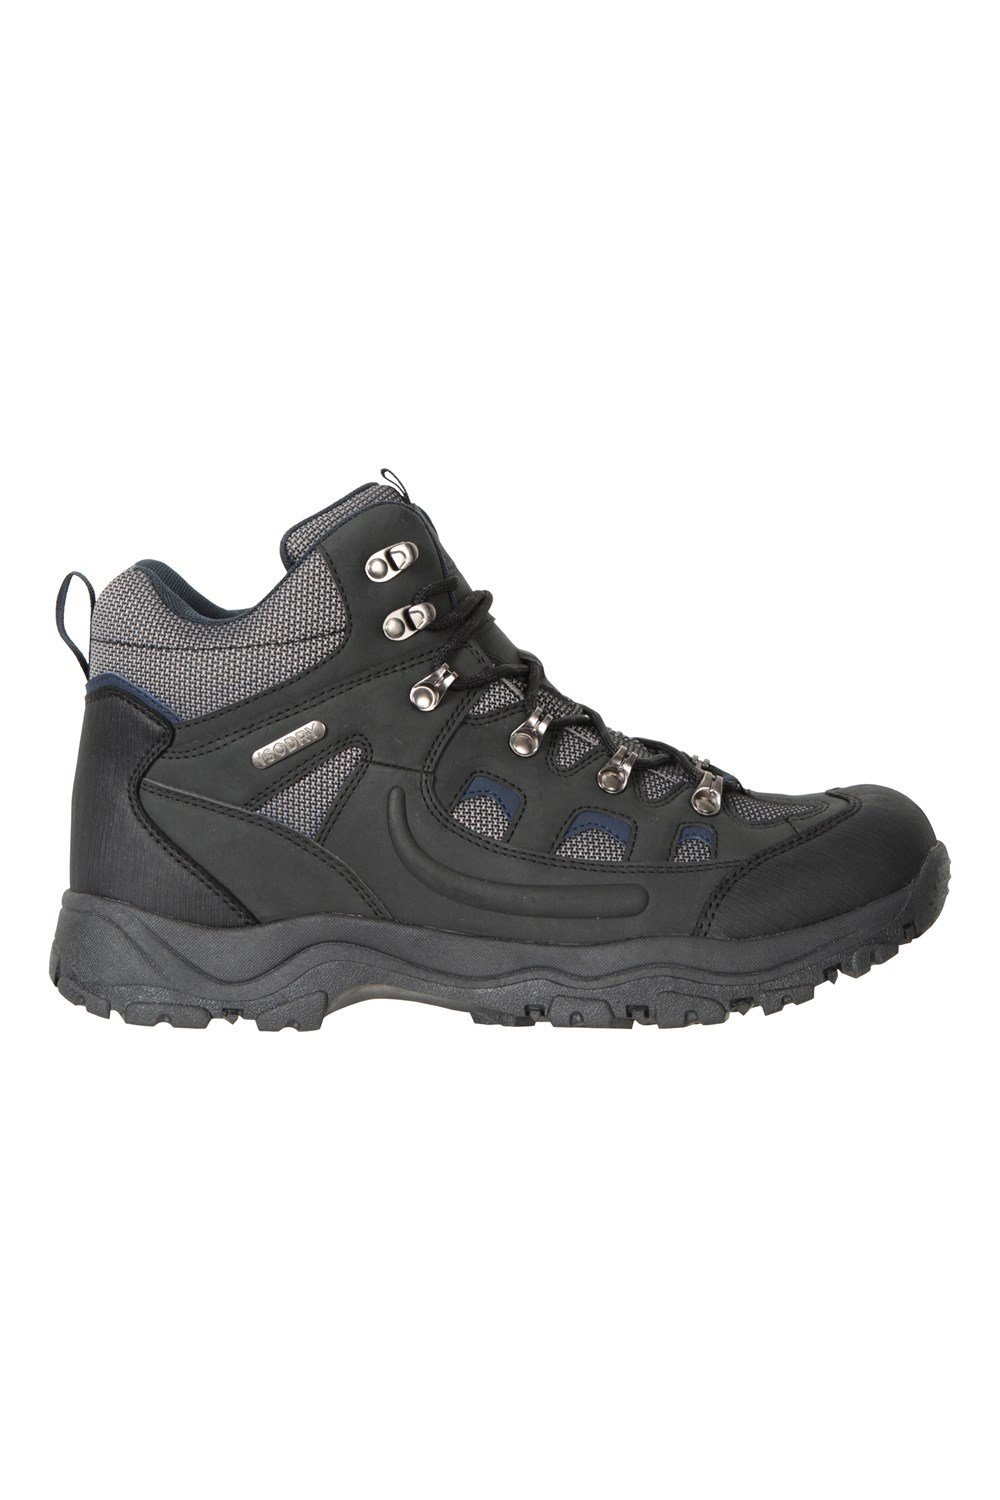 Mountain Warehouse Adventurer Mens Waterproof Boots - Hiking Trekking ...